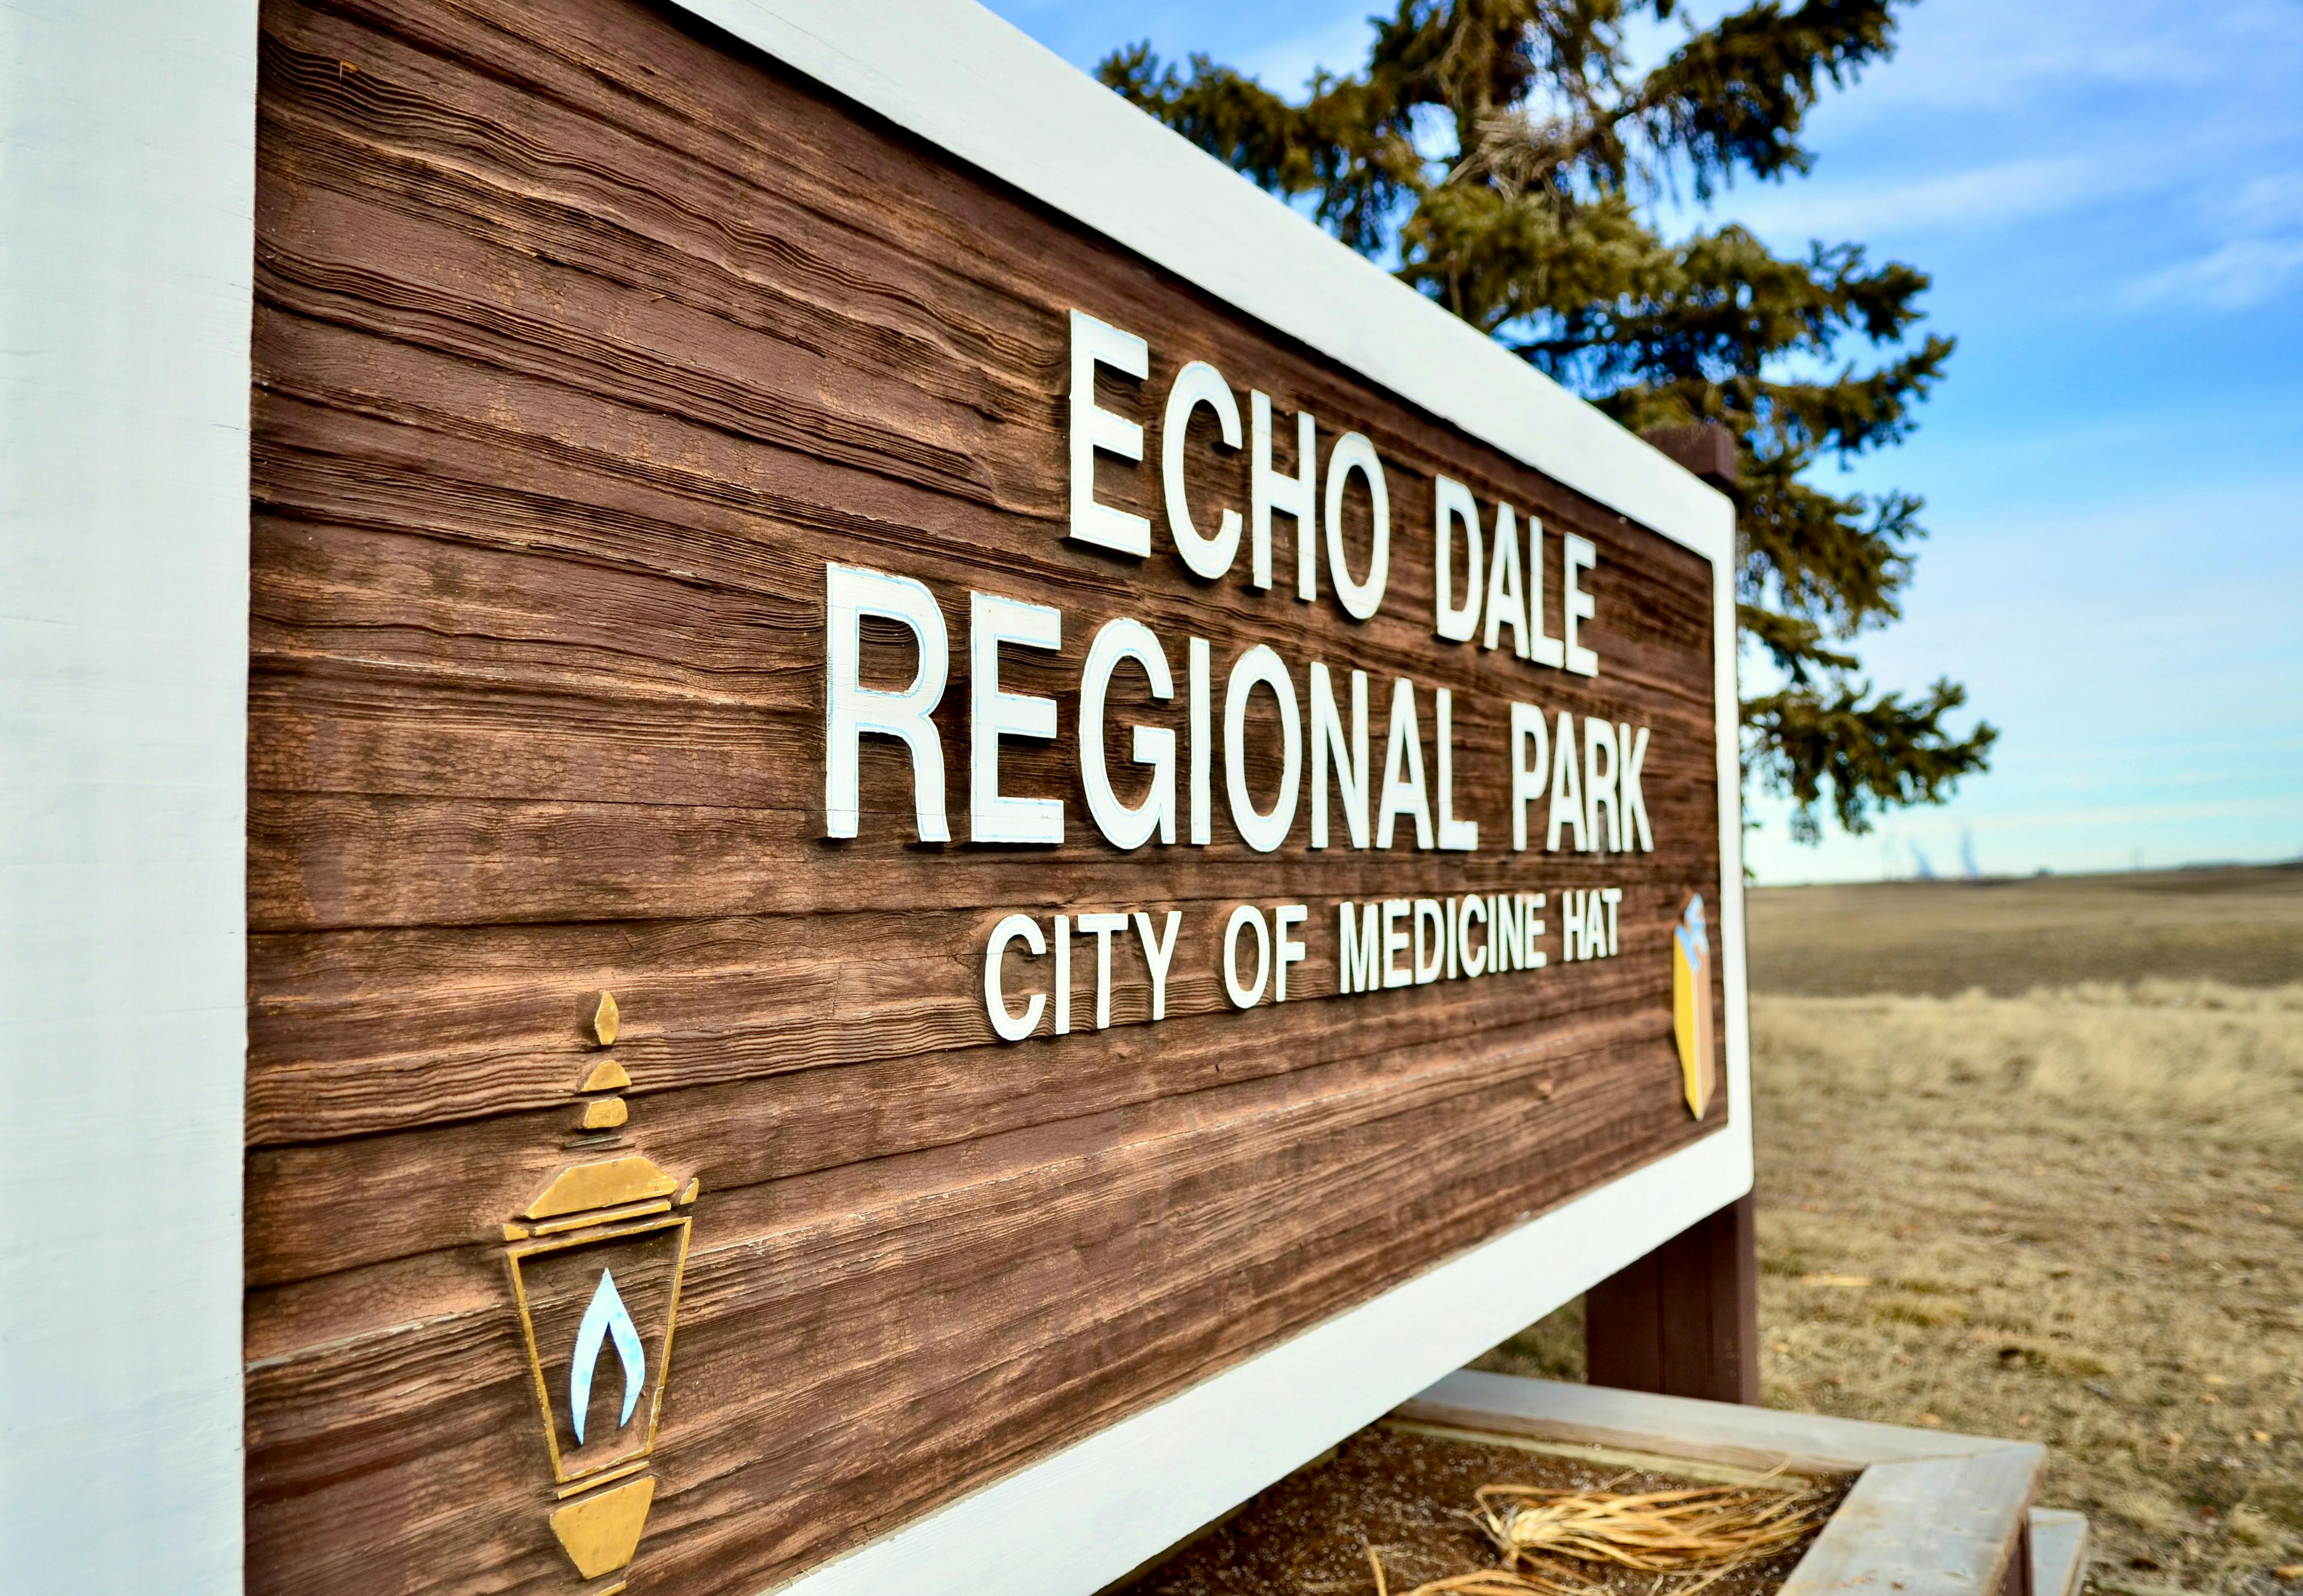 Echo Dale Regional Park